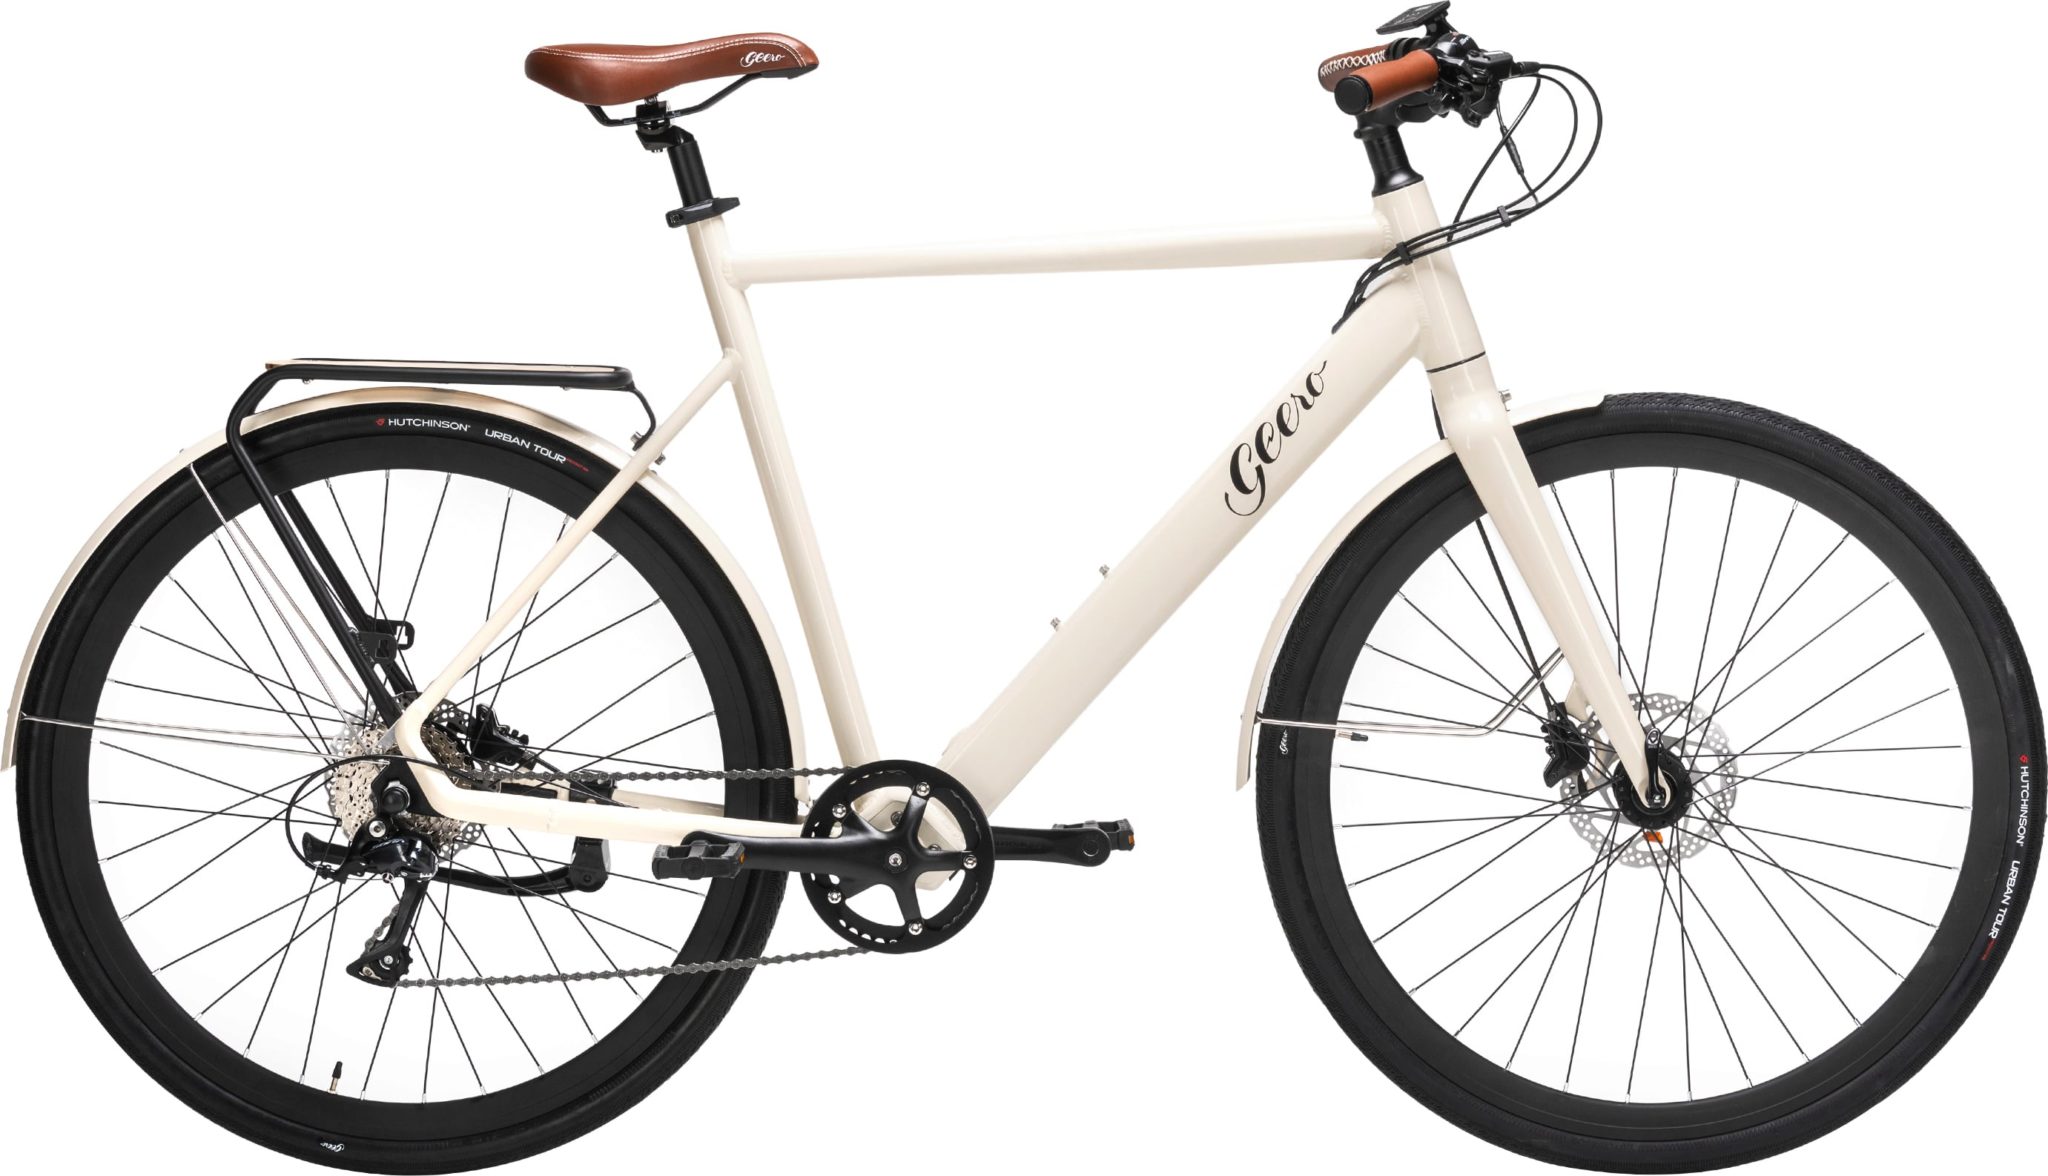 GEERO 1 E-Bike City-Classic - eBikeNews